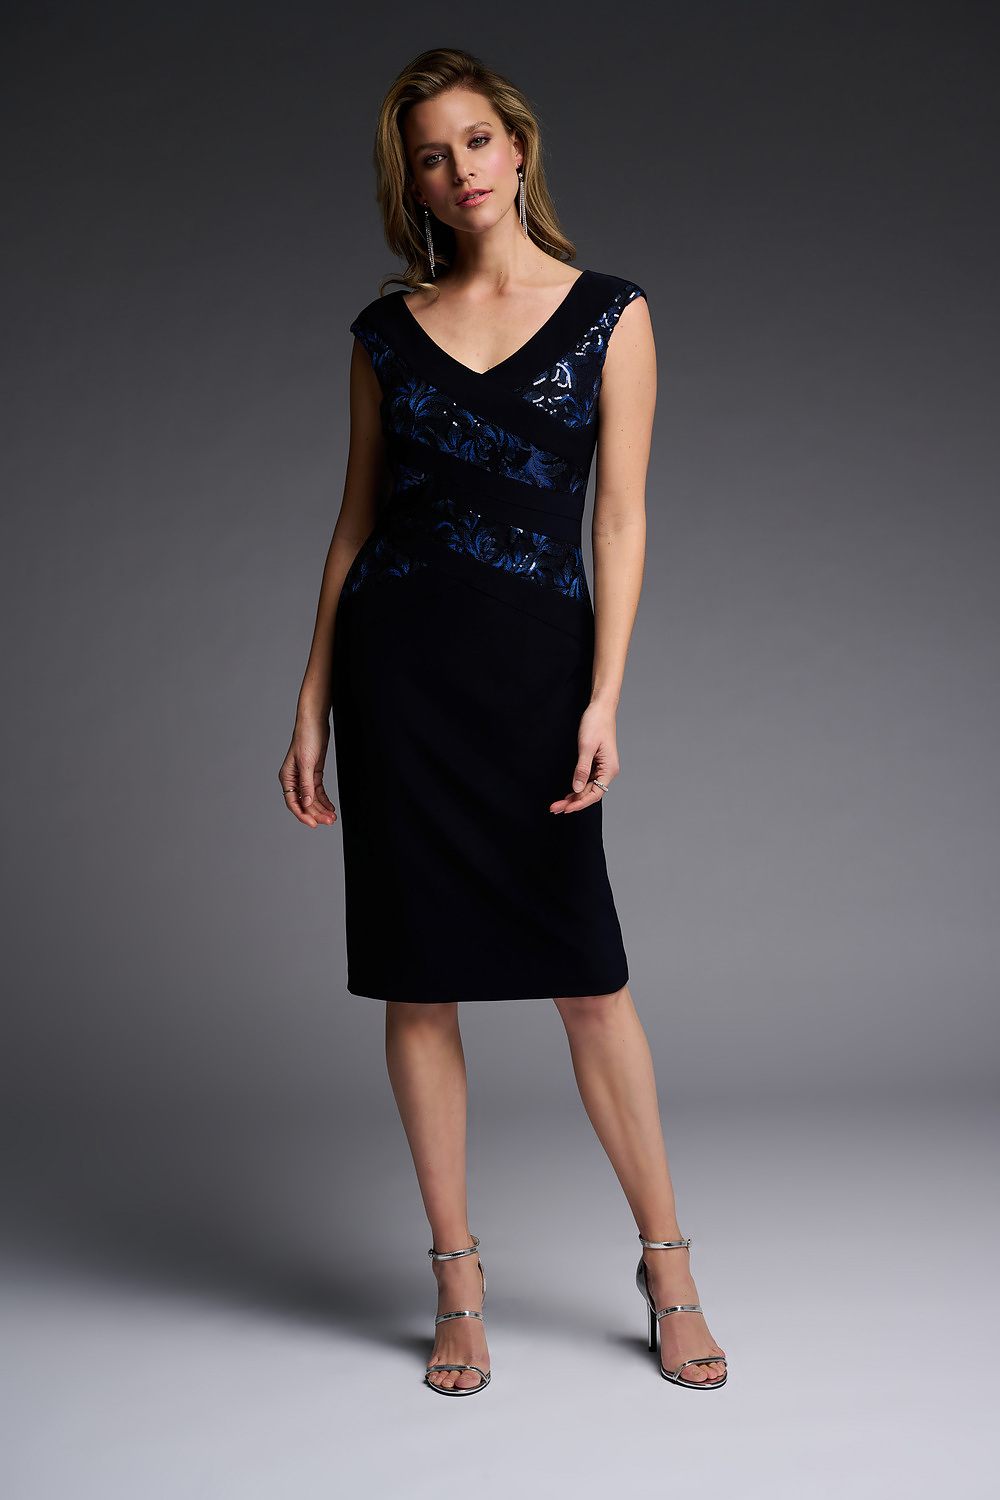 Joseph Ribkoff Sequin Appliqué Dress Style 223729. Midnight Blue